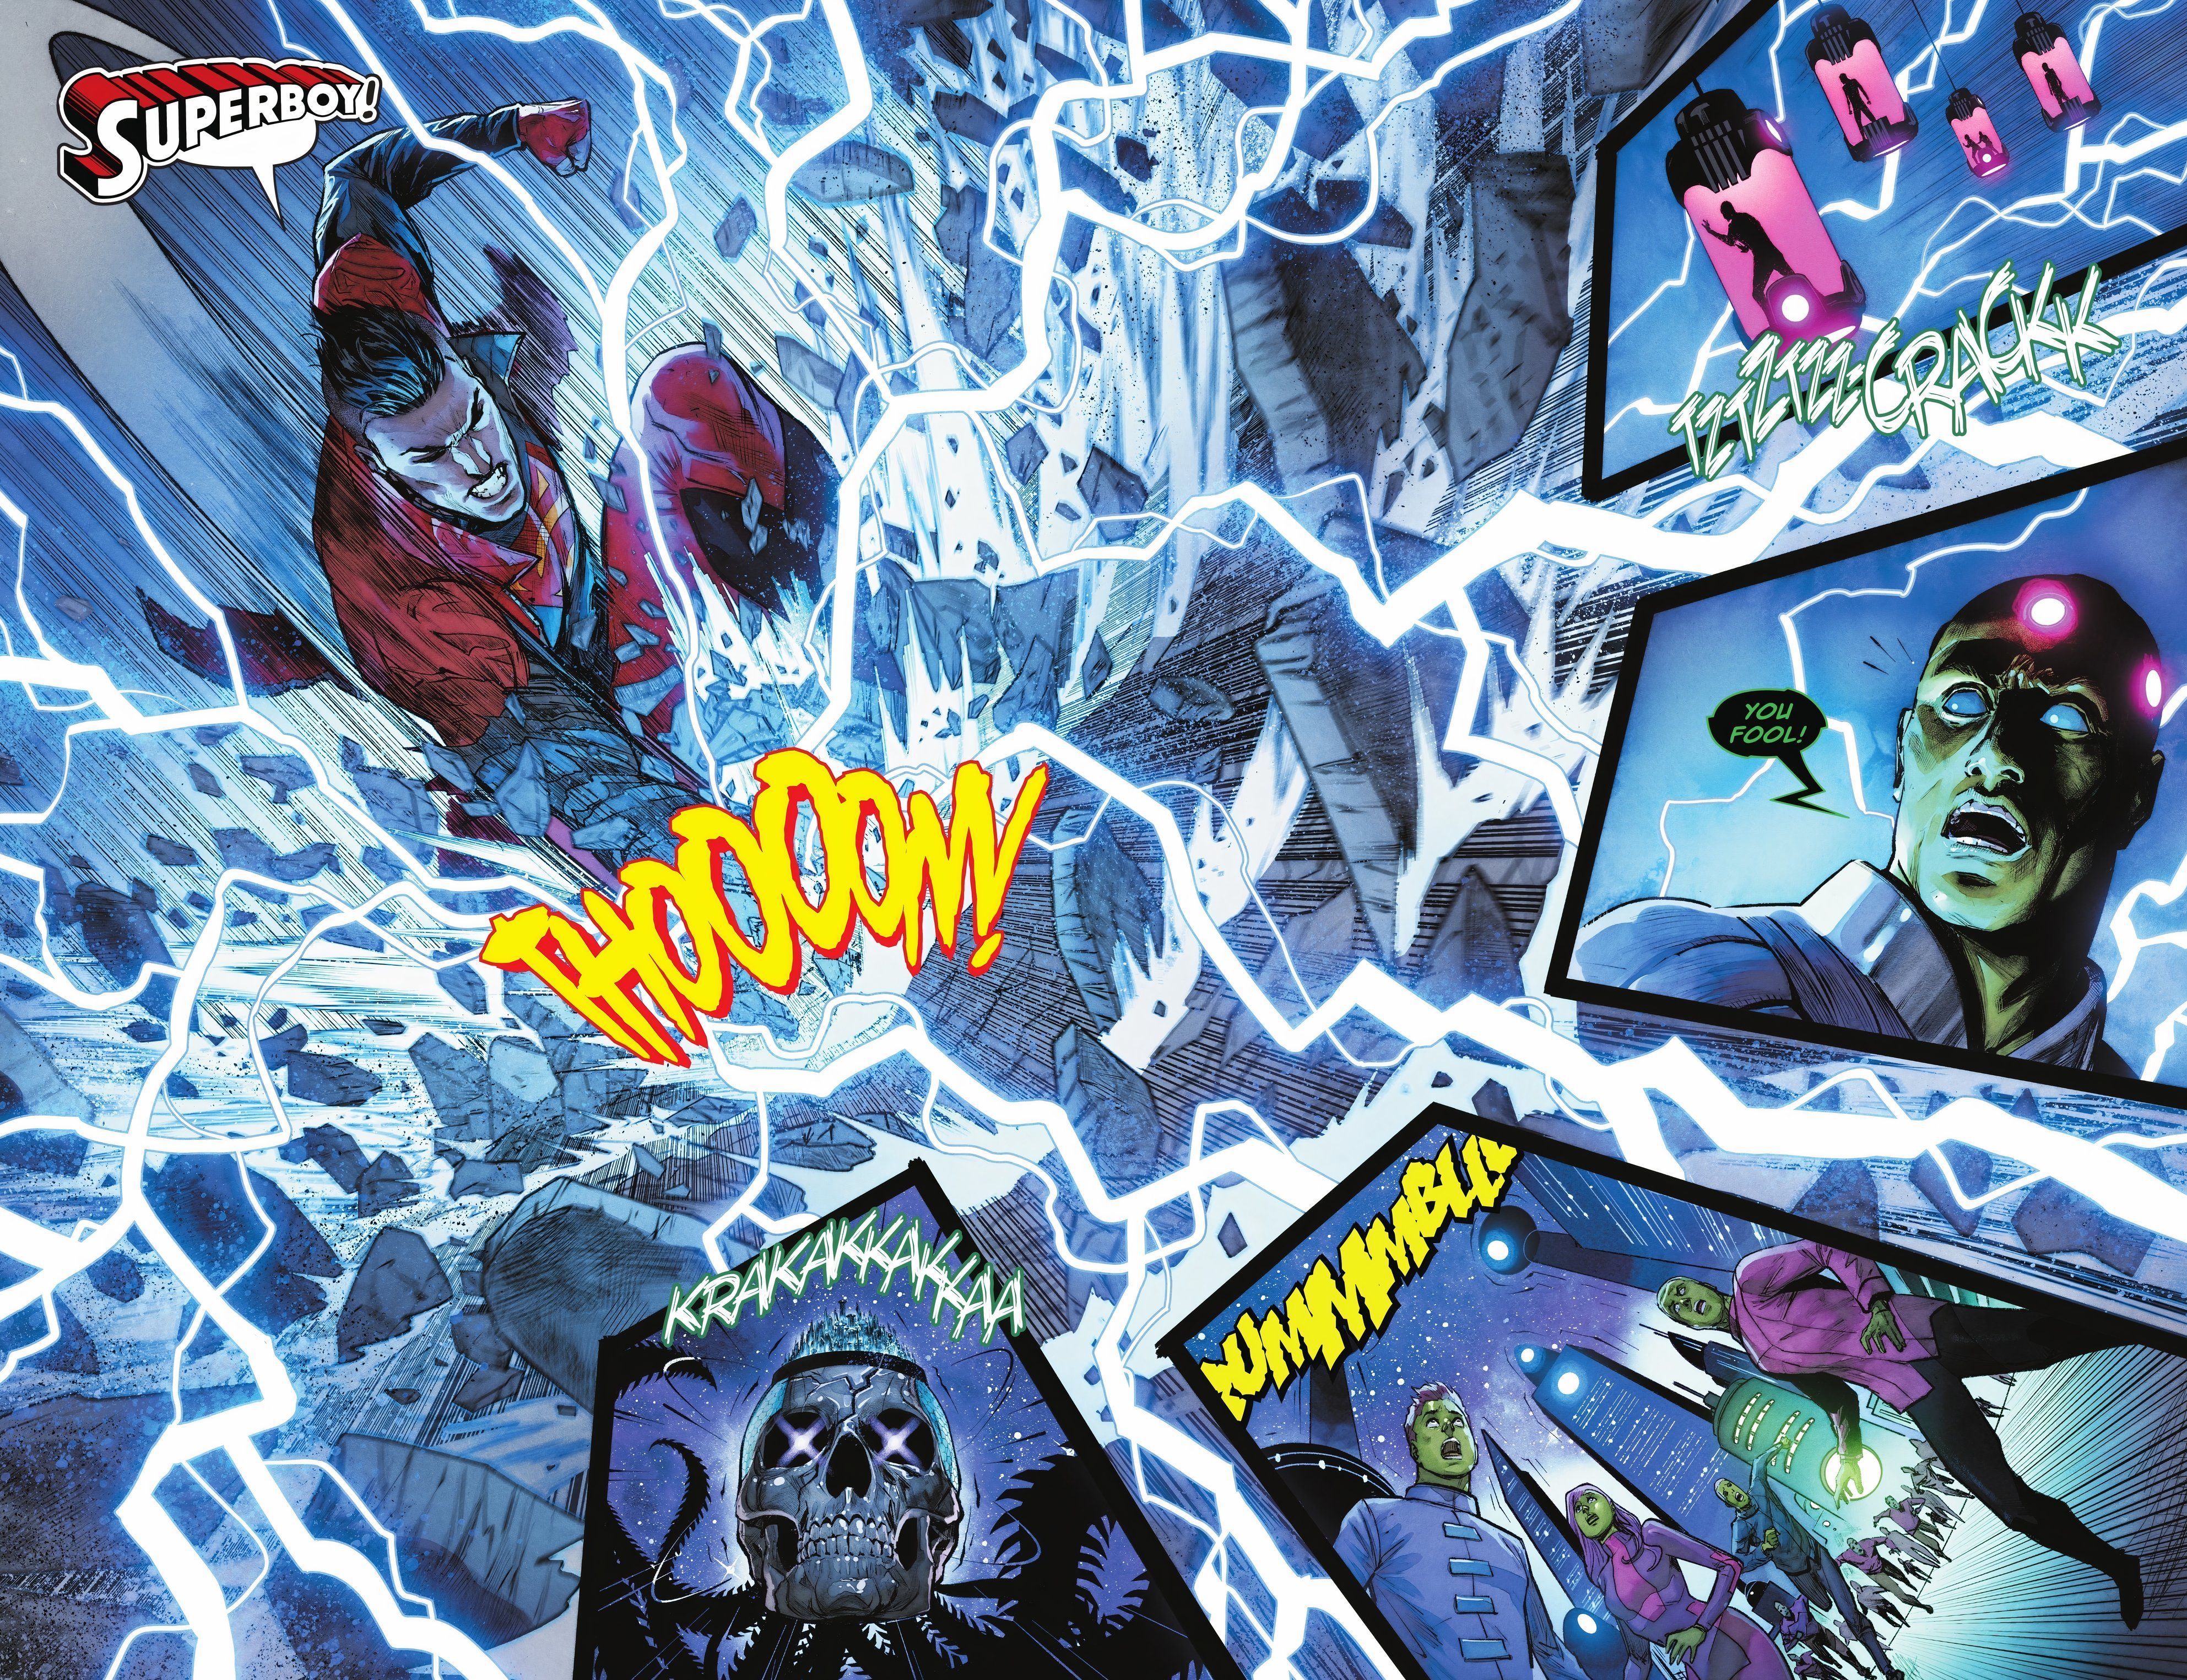 Superboy libera telecinese tátil na nave DC de Brainiac